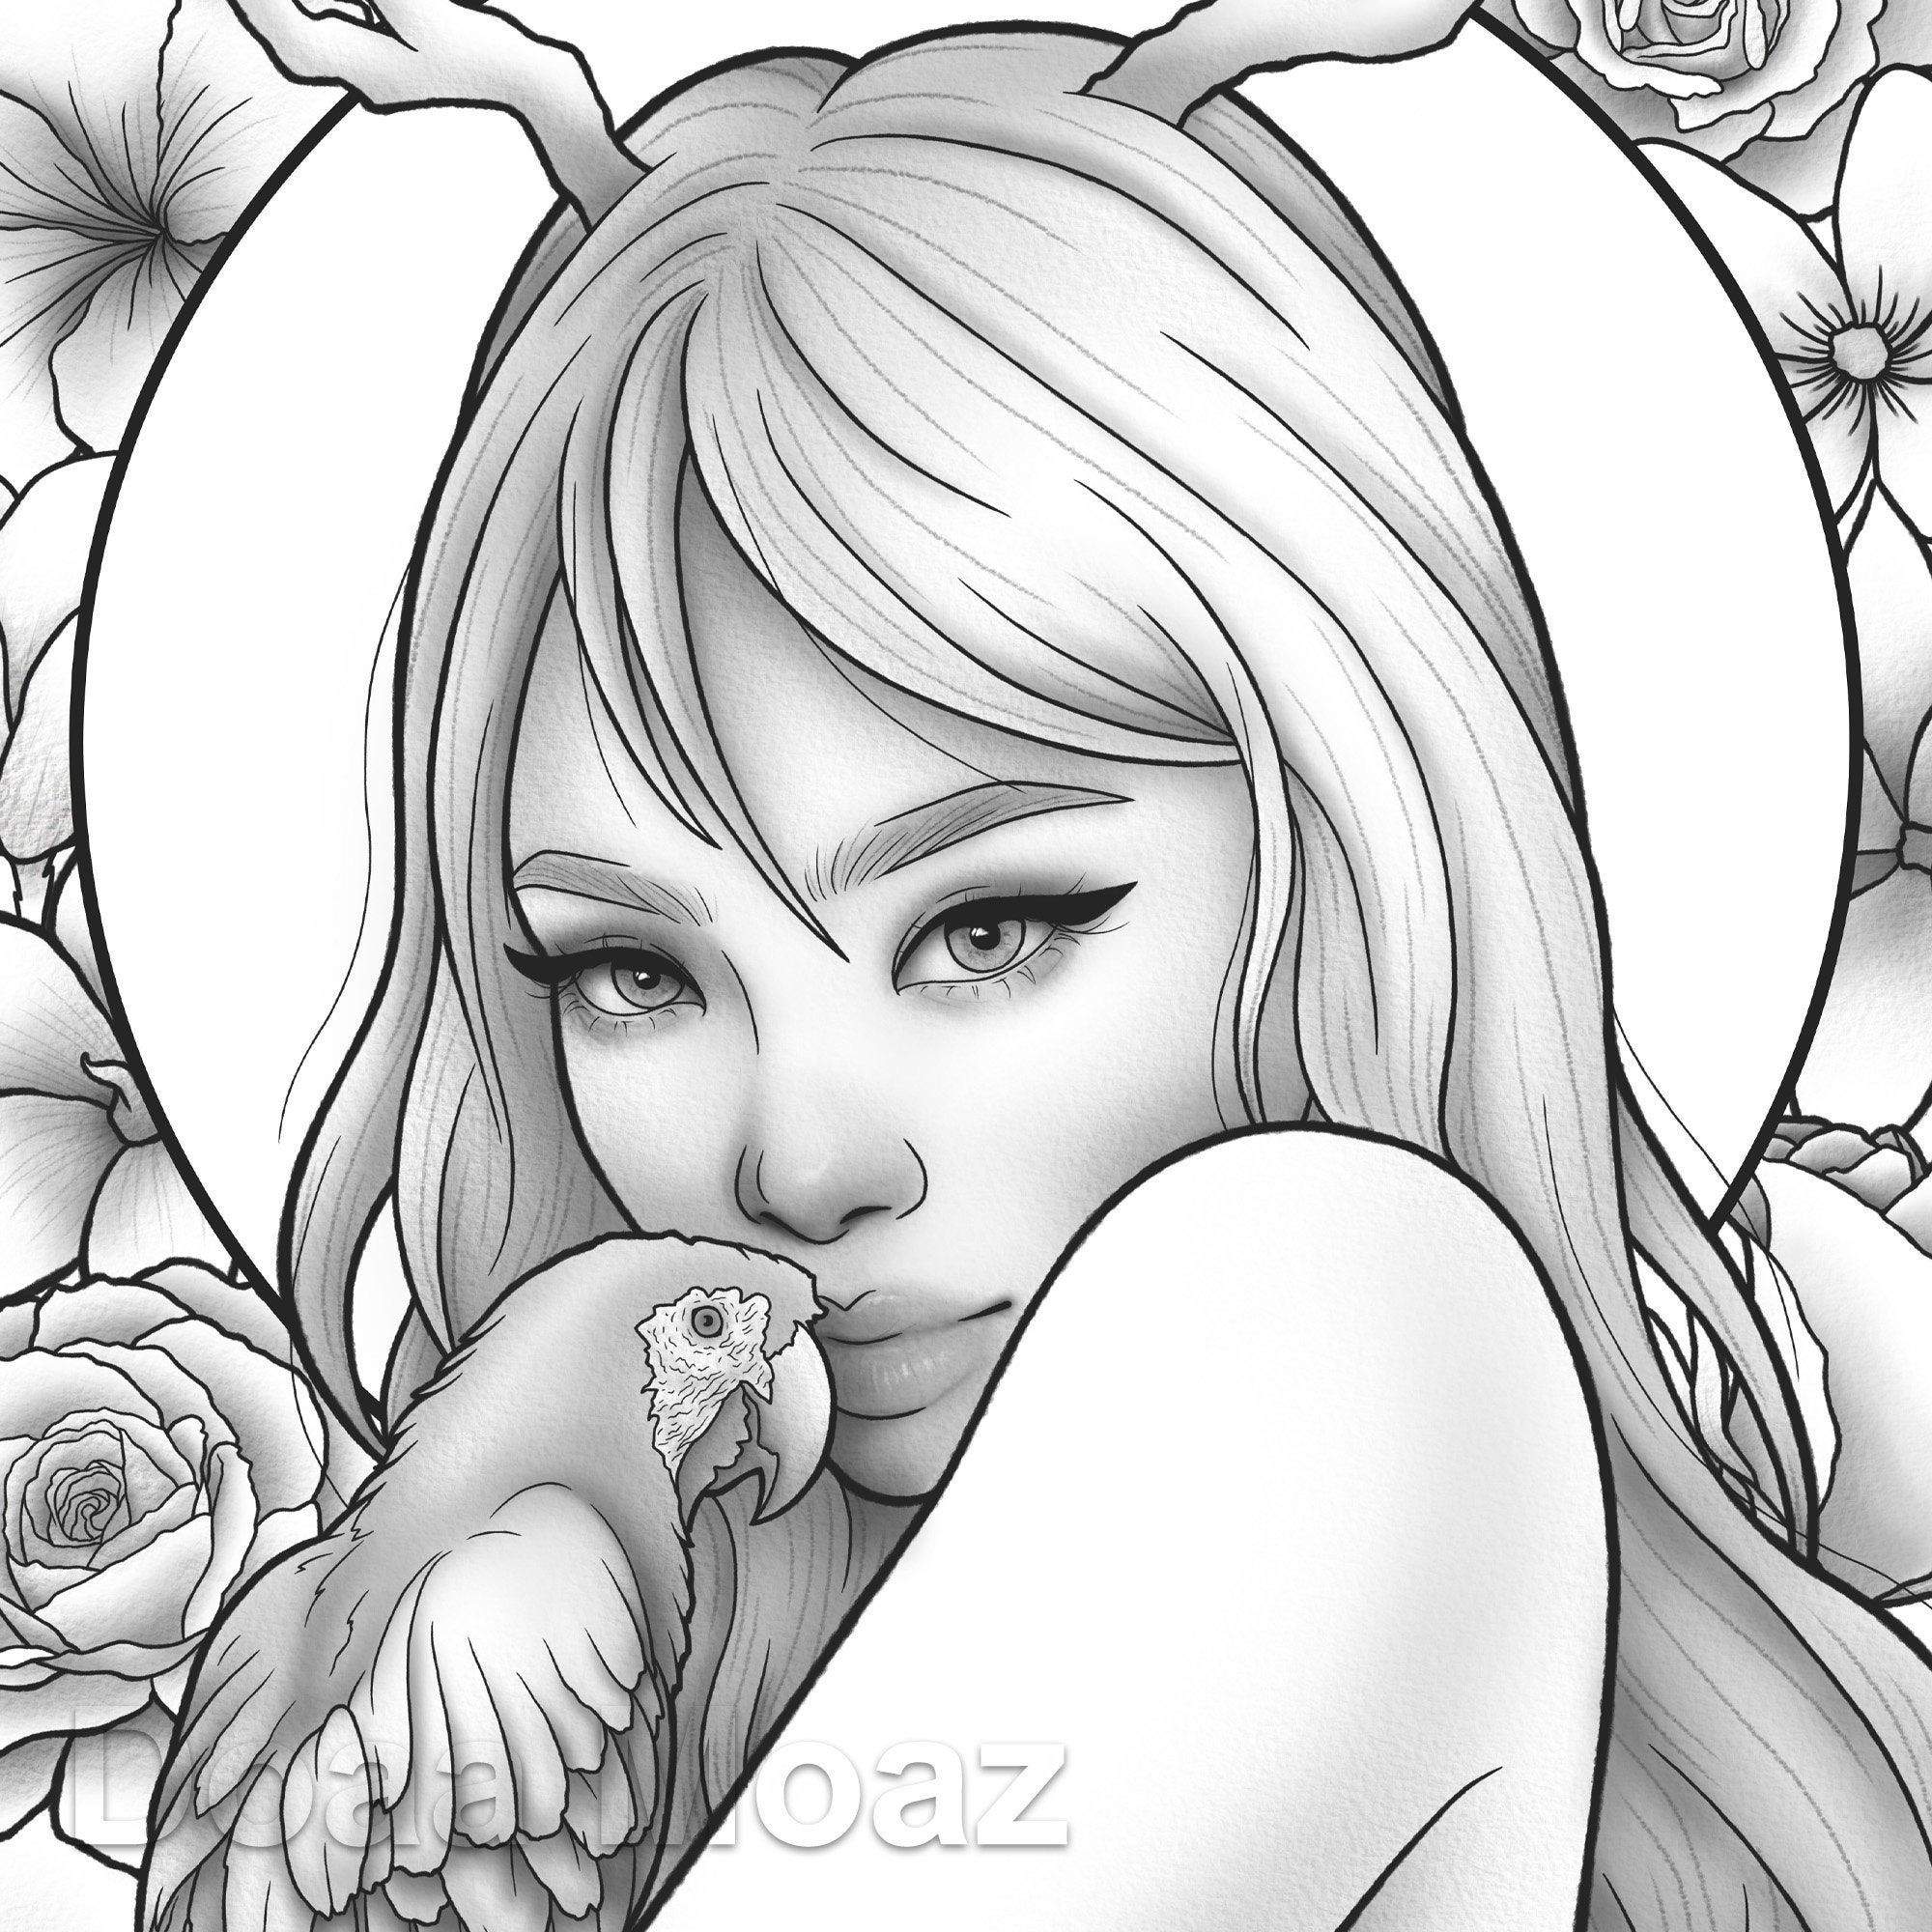 Printable Coloring Page Korean Girl Floral Fantasy Portrait | Etsy